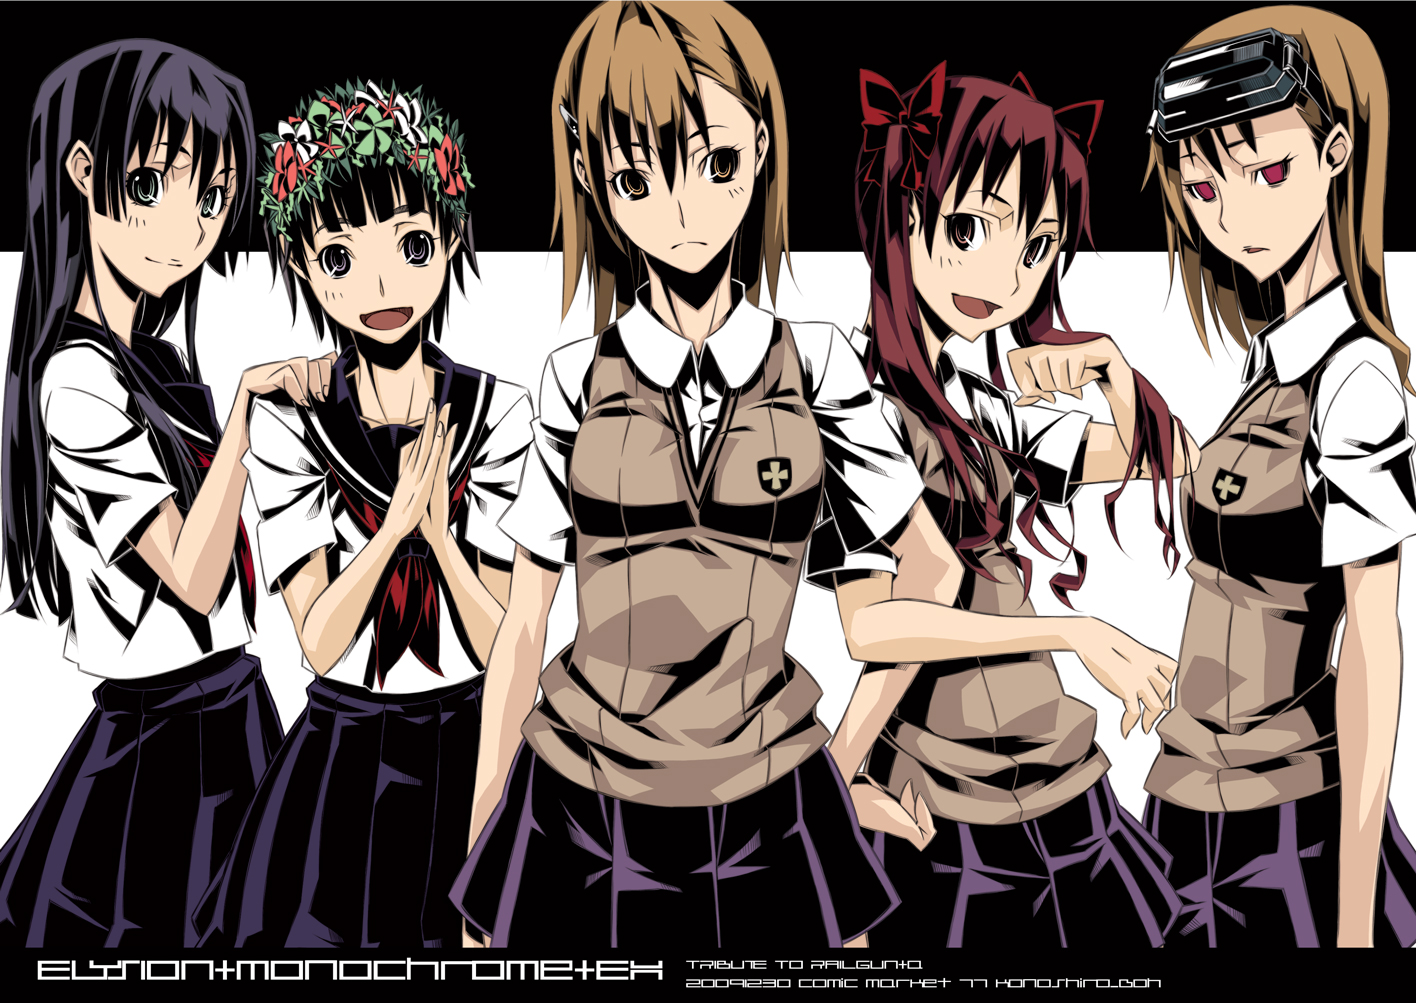 A group of four anime characters wearing school uniforms - Mikoto, Kuroko, Ruiko, and Kazari.